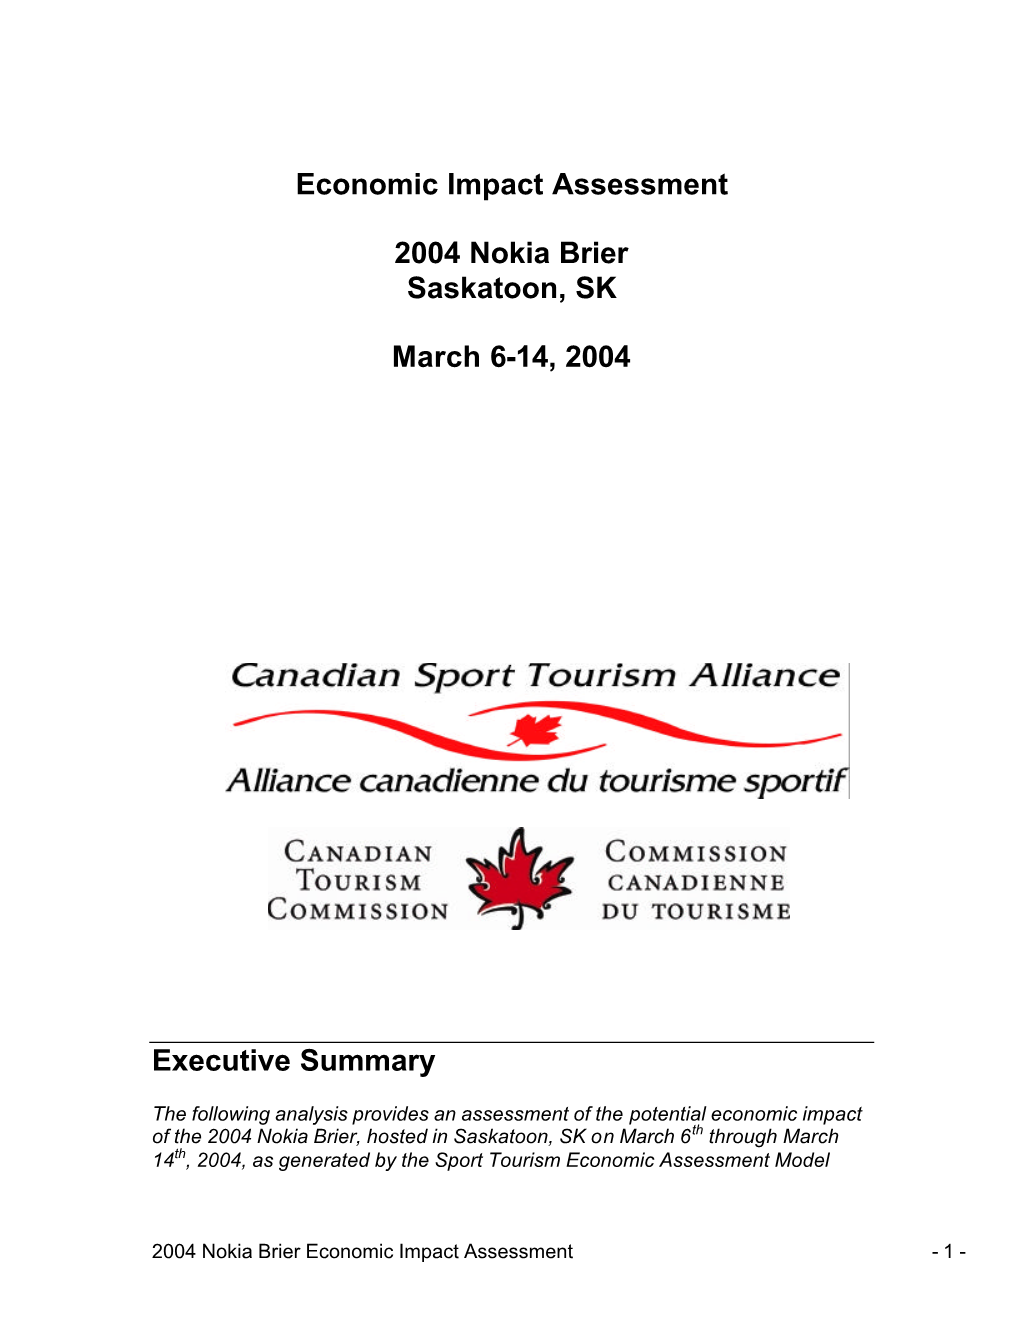 Economic Impact Assessment 2004 Nokia Brier Saskatoon, SK